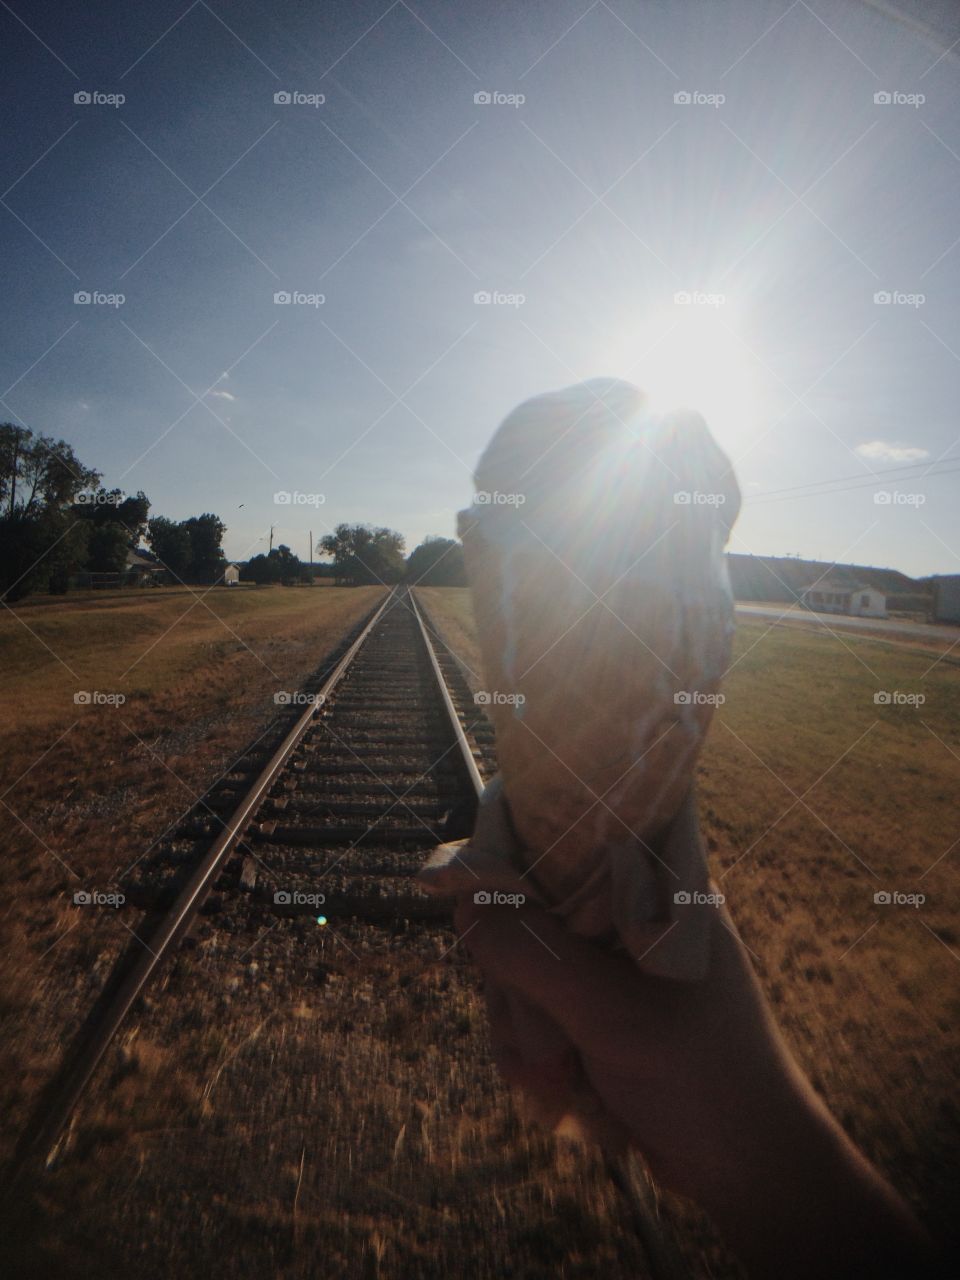 Ice cream & Train tracks. Hand holding ice cream in Texas